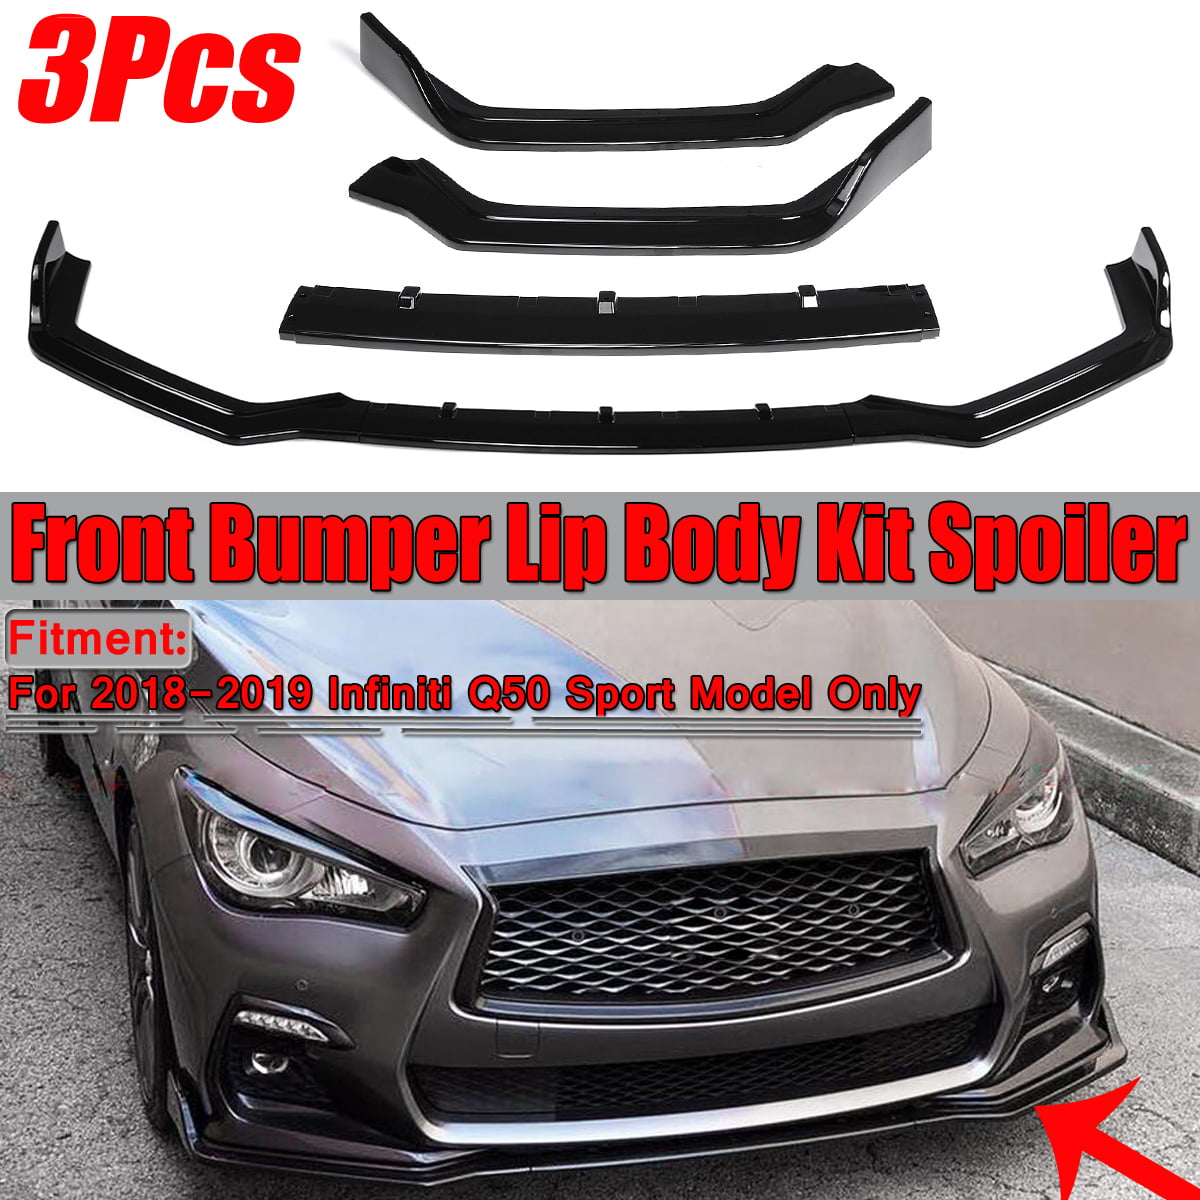 JOYOTO 3PCS Front Bumper Lip Splitter Fit for Infiniti Q50 2018 2019 2020 2021 Sport Model JDM Style Air Dam Chin Spoiler Body Kit,Carbon Fiber Look 